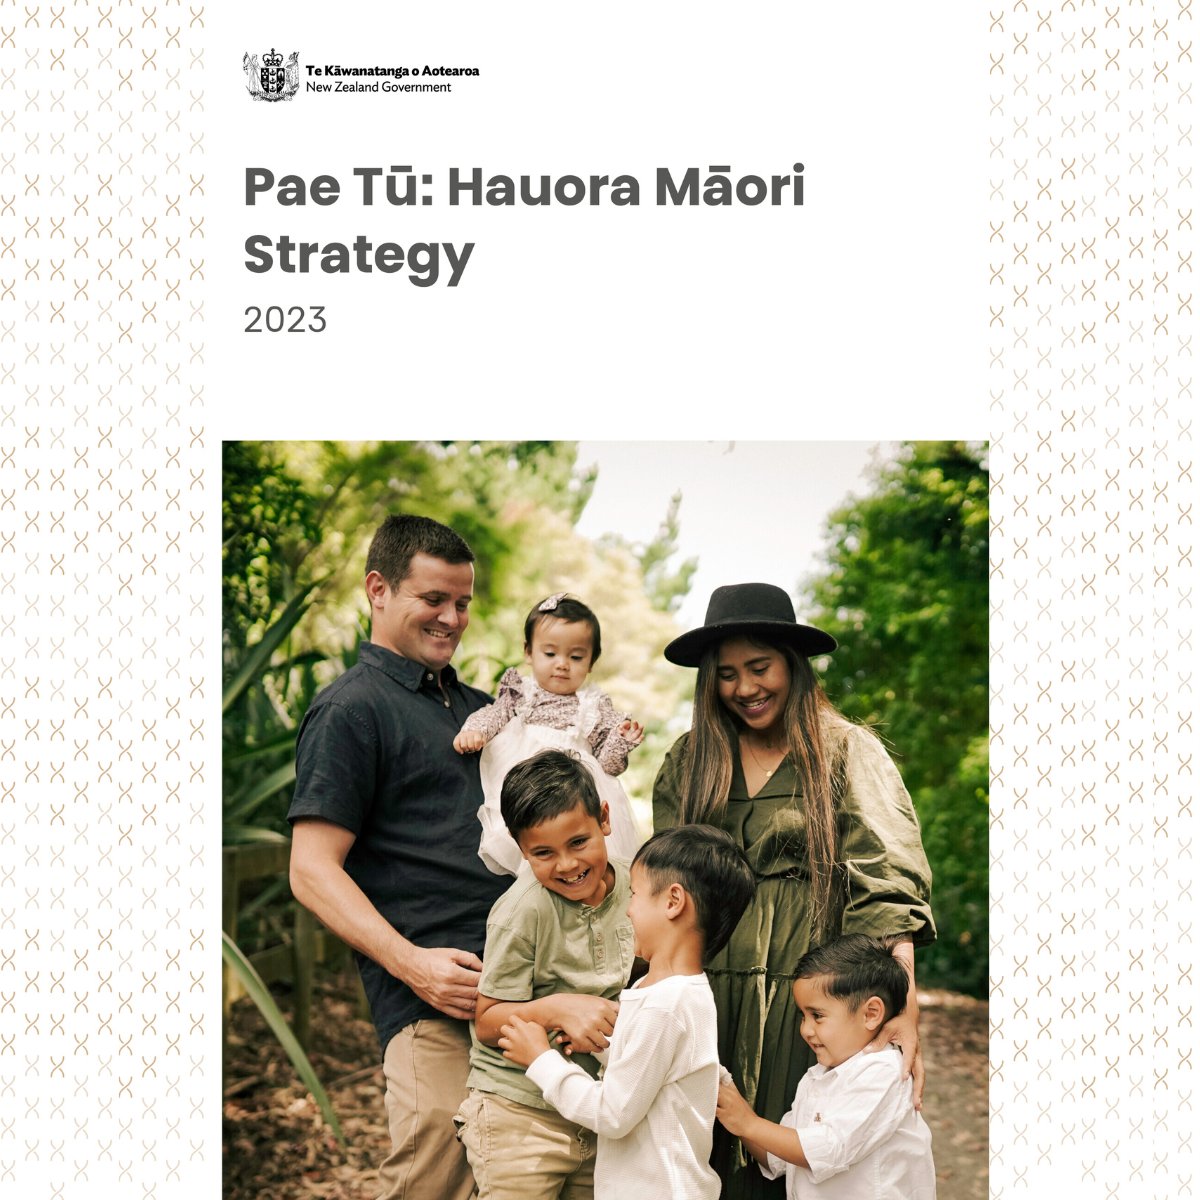 Pae Tū: Hauora Māori Strategy launched today, developed in partnership with Manatū Hauora.

Ensuring our reformed health system upholds Te Tiriti o Waitangi, improves equity, & enhances health outcomes for whānau Māori:
teakawhaiora.nz/our-work/pae-o…

#MāoriHealth #HauoraMāoriStrategy